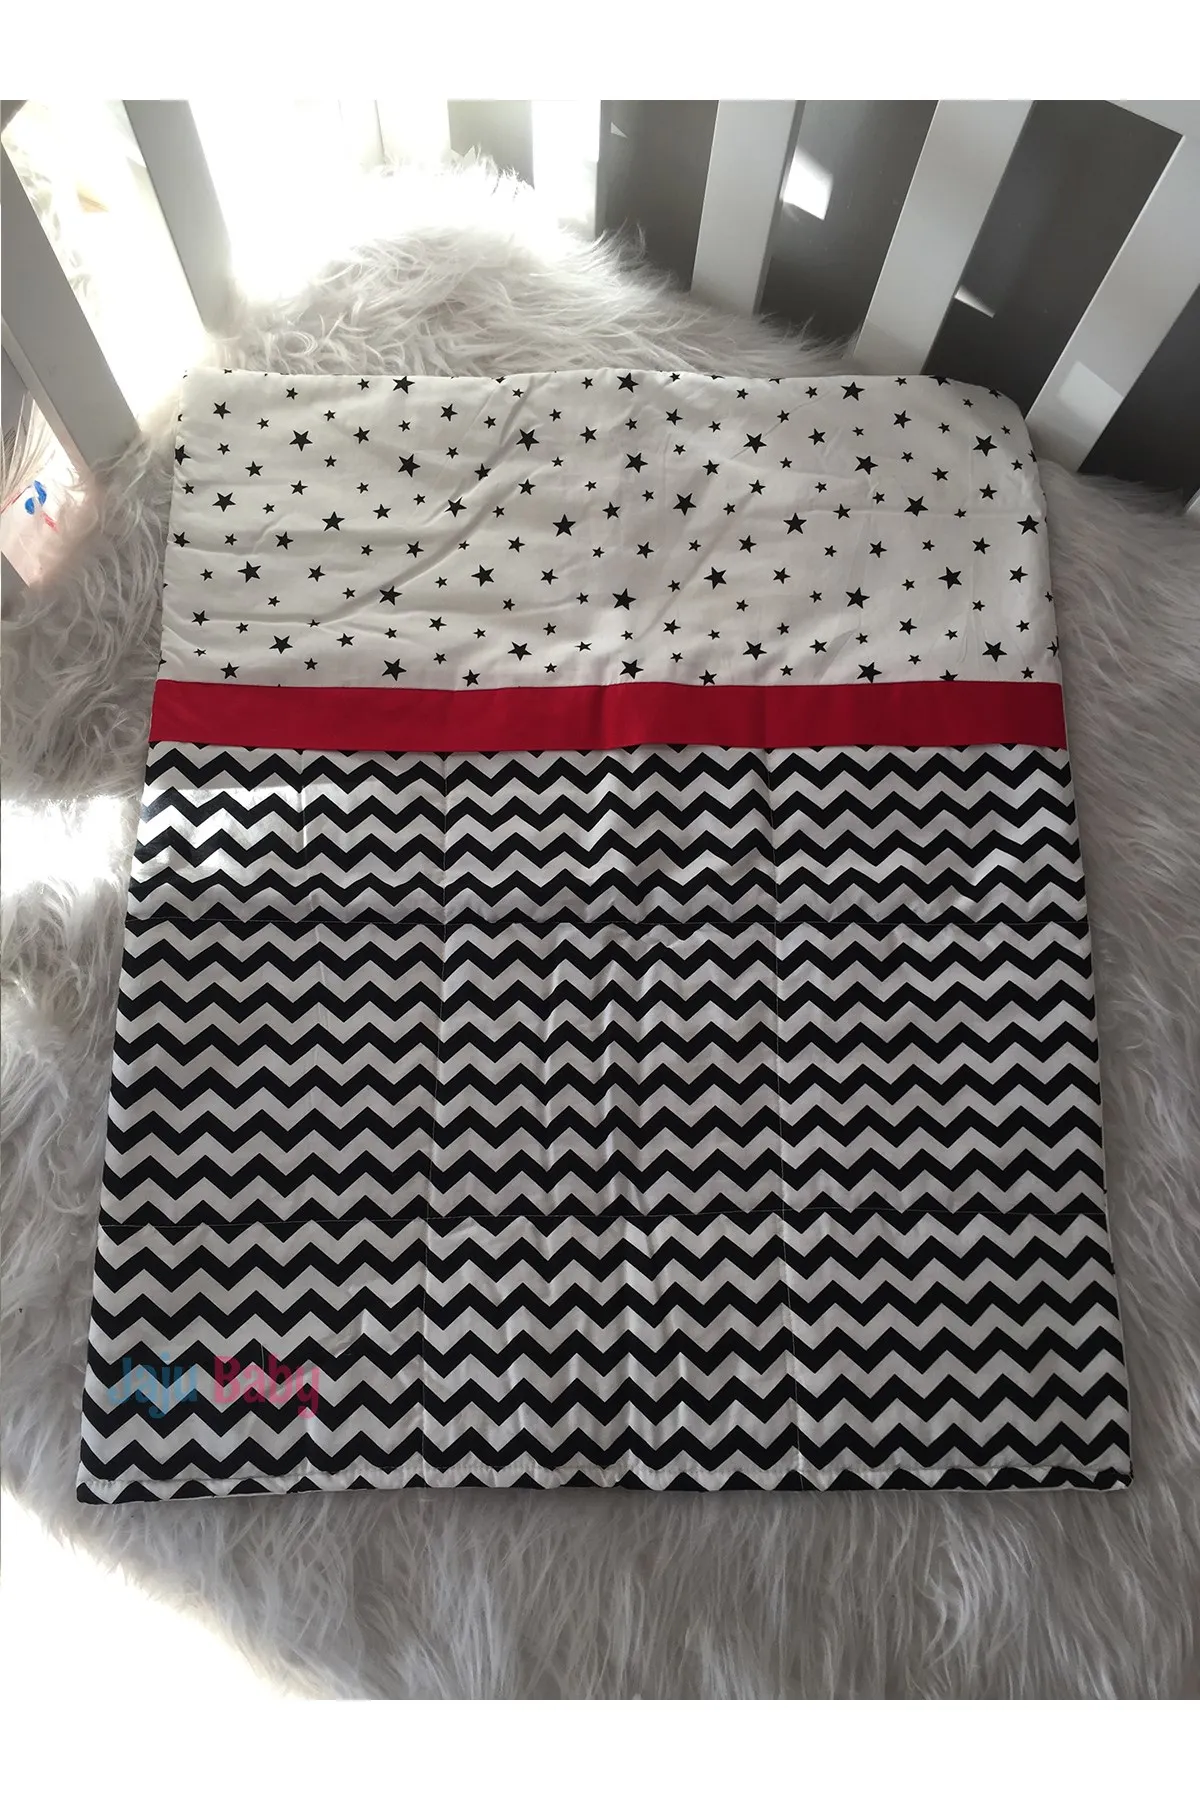 

Jaju Baby Handmade, Red, Navy Blue Zigzag and Starry Pattern Design Luxy Baby Blanket